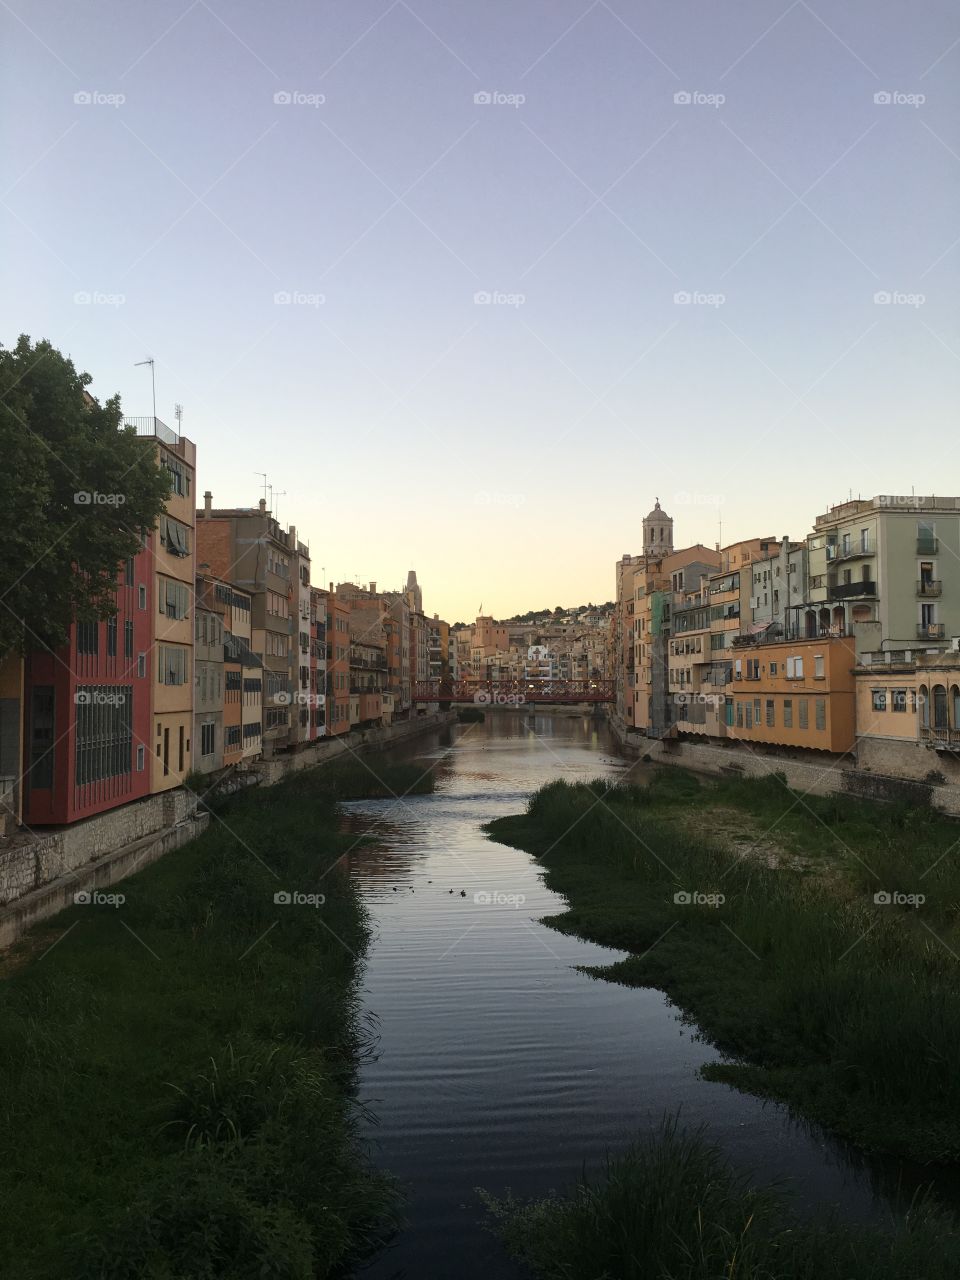 Girona, Spain 🇪🇸 